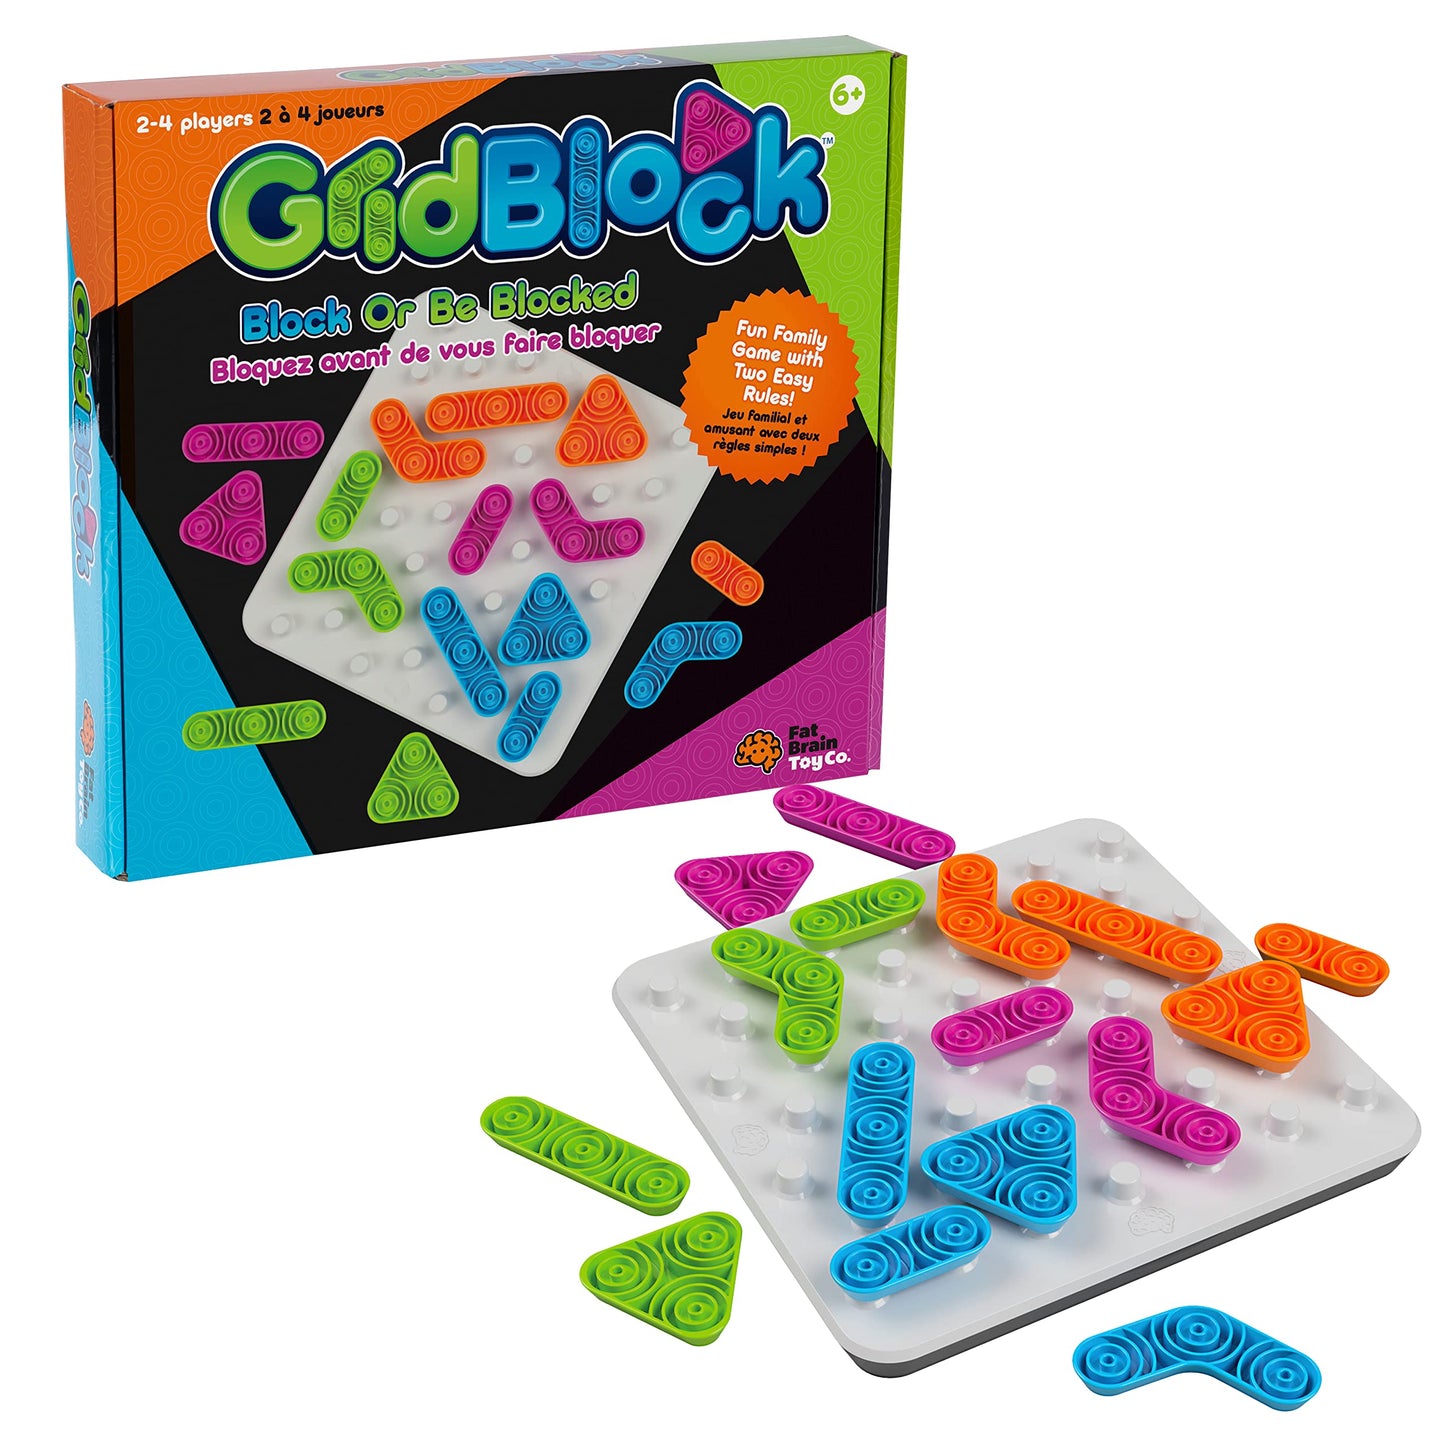 Gridblock Game - Fat brain toys